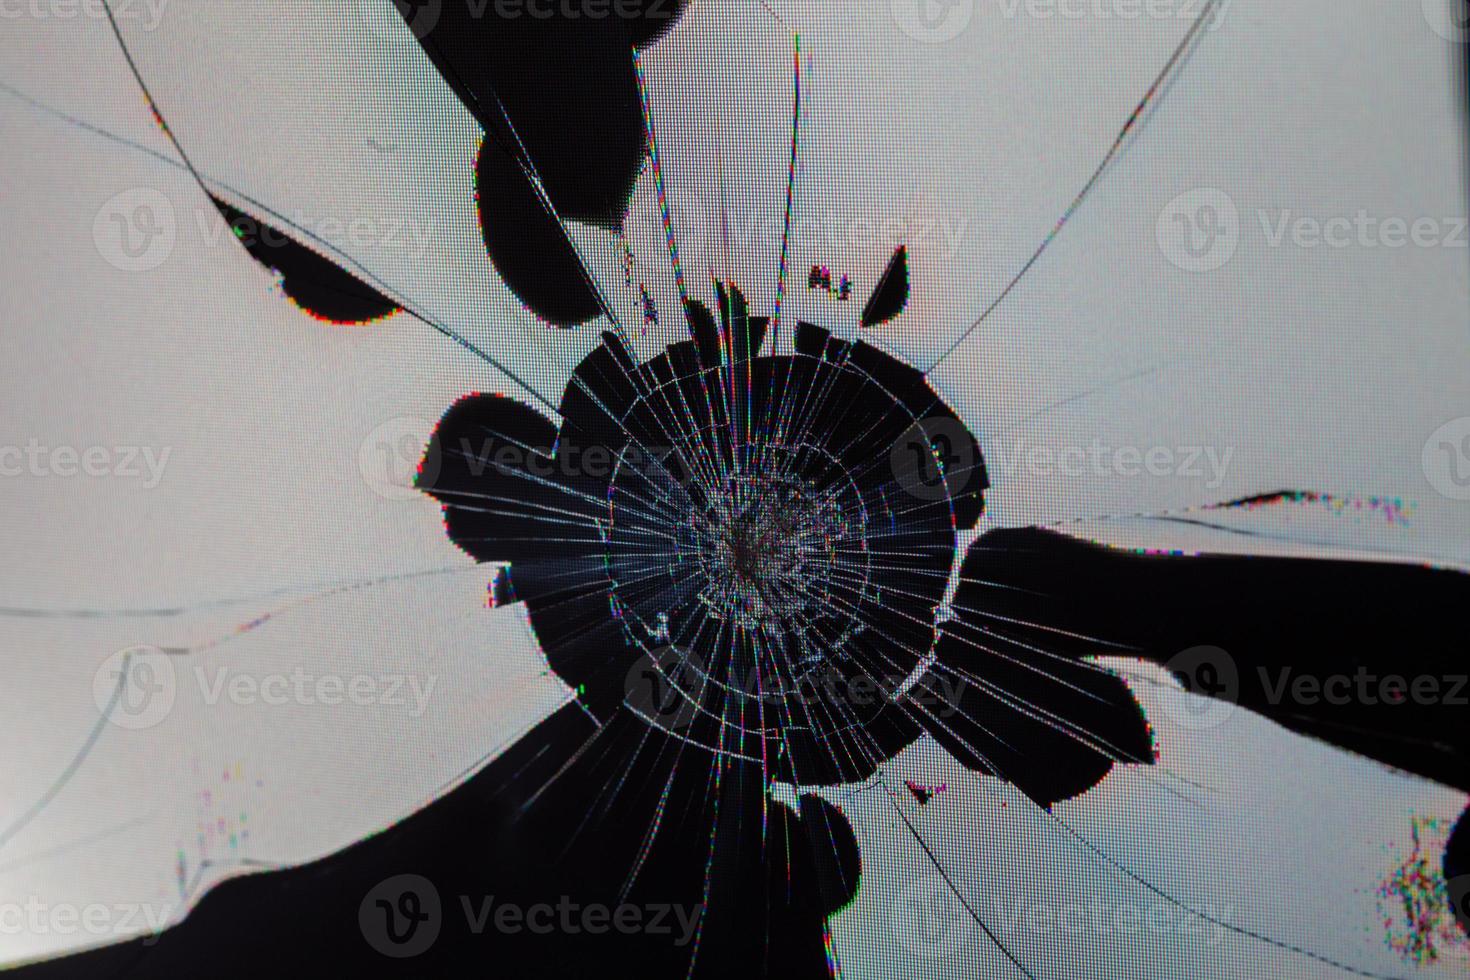 textura plana de pantalla lcd tft tn rota con fuga de cristal y daño físico foto